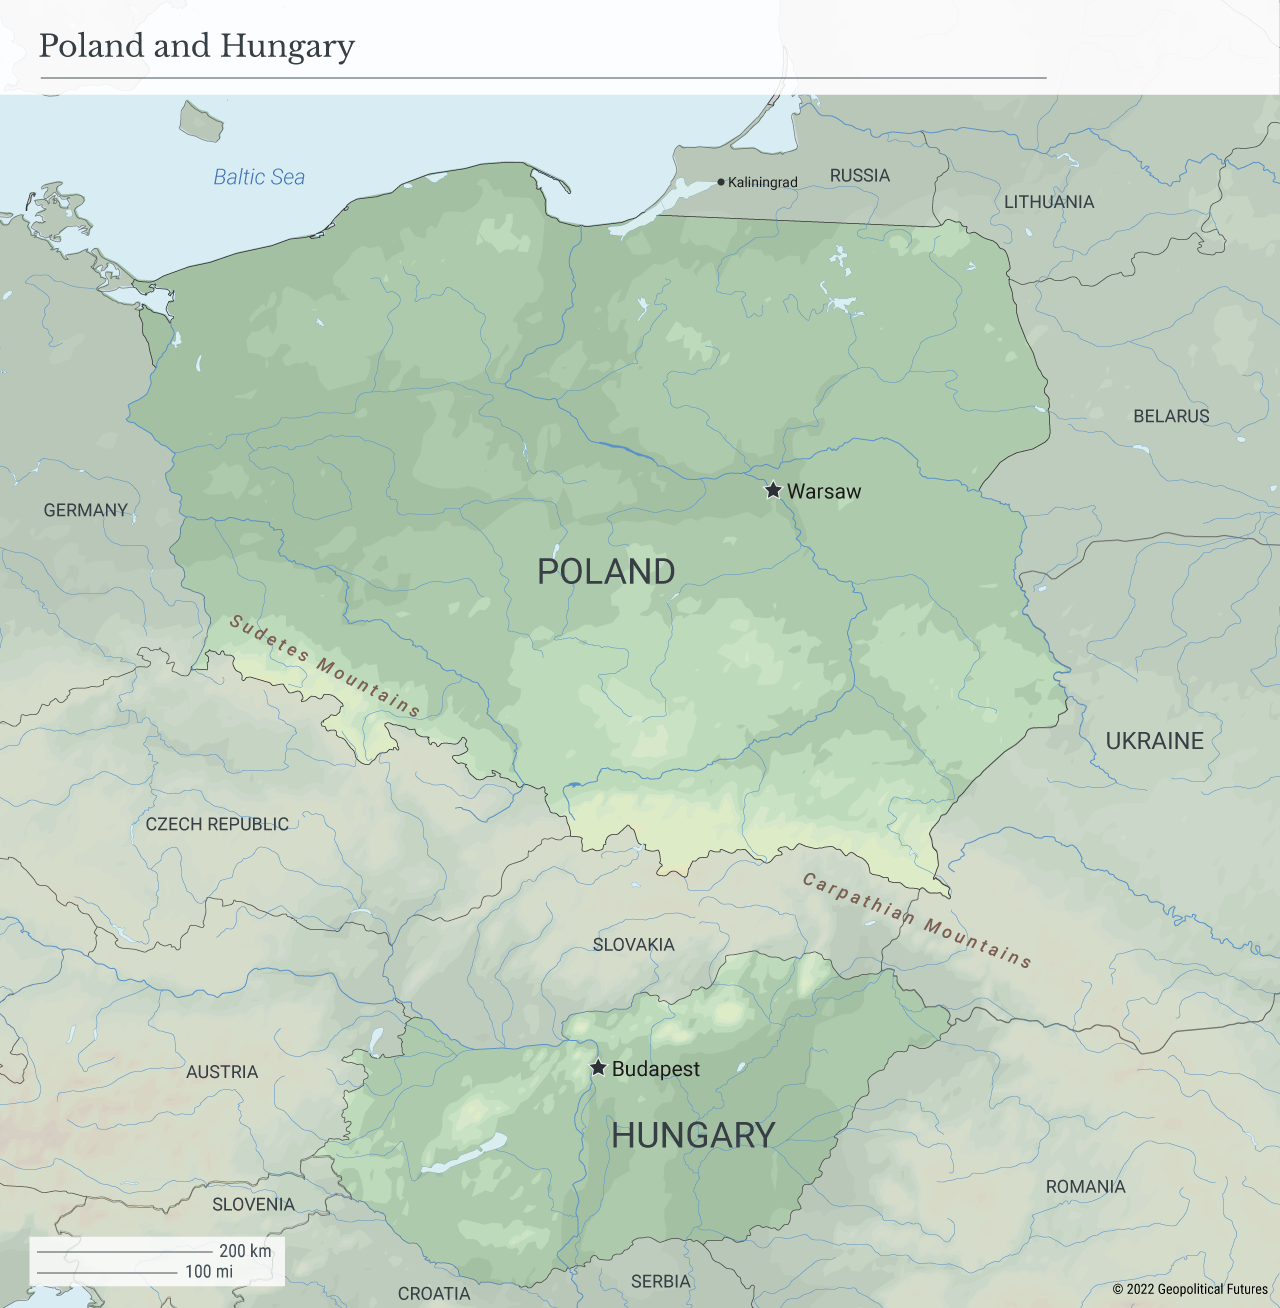 Poland and Hungary